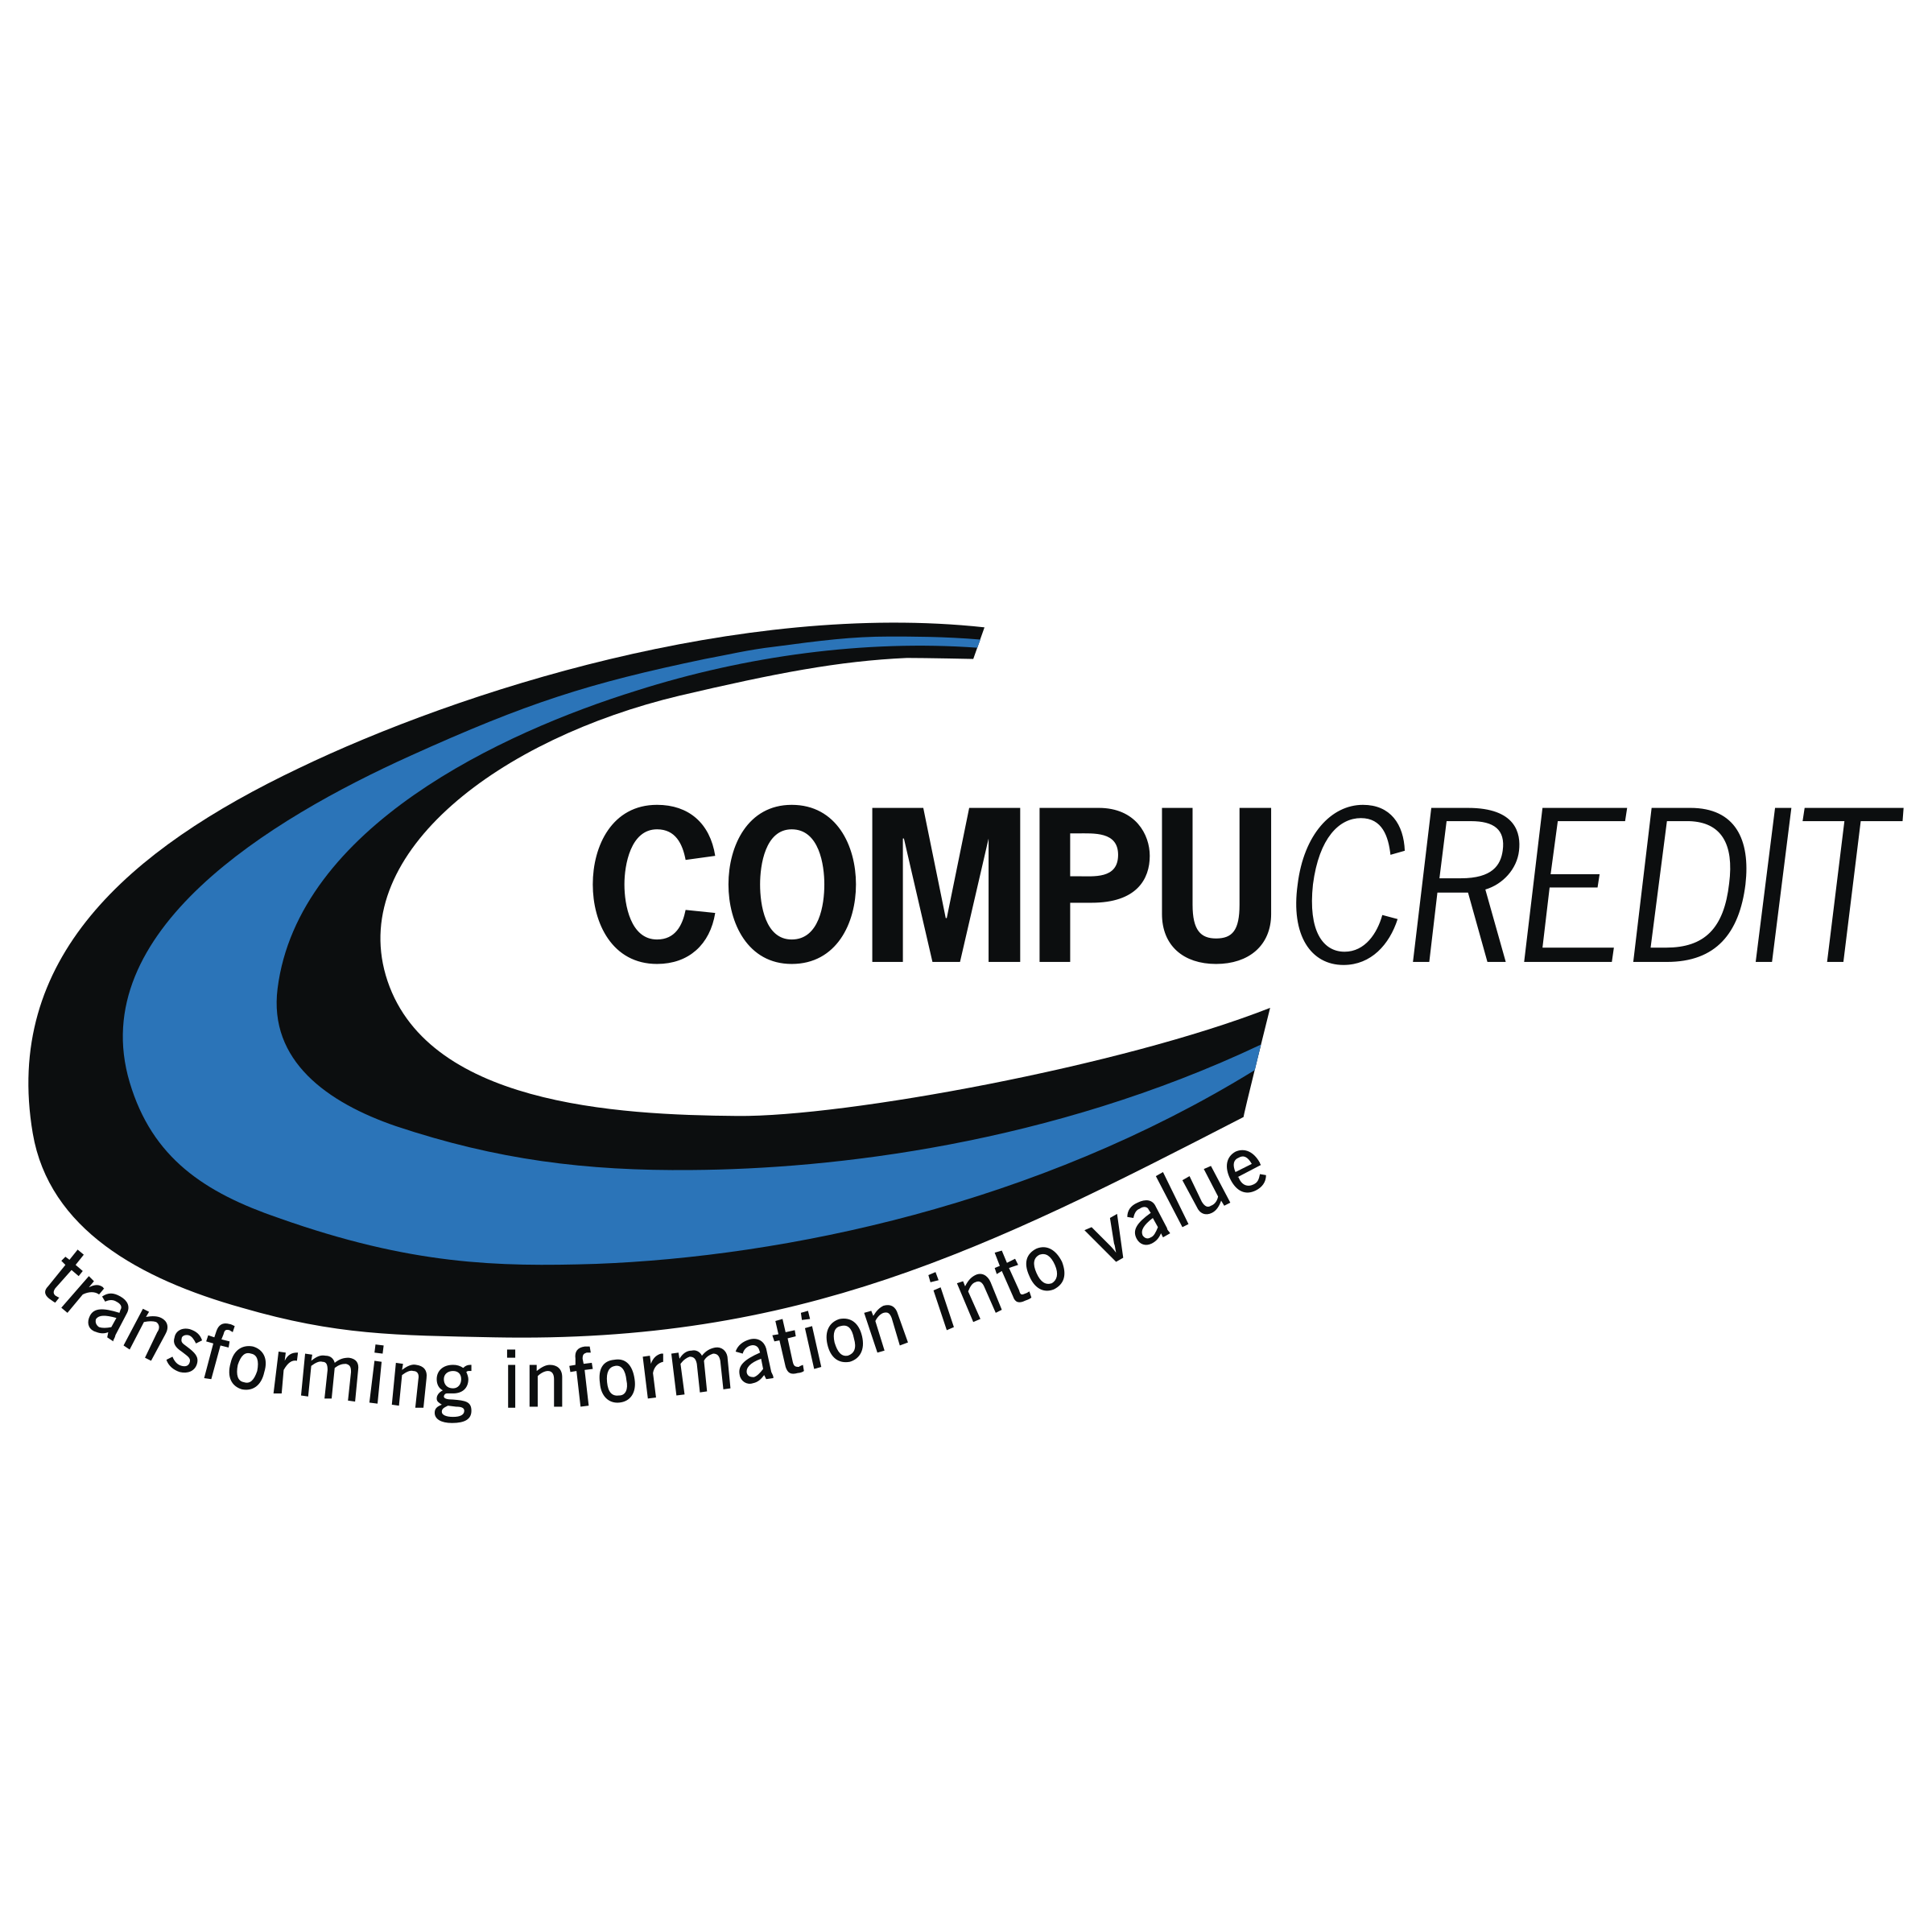 COMPUCREDIT Brand Logo